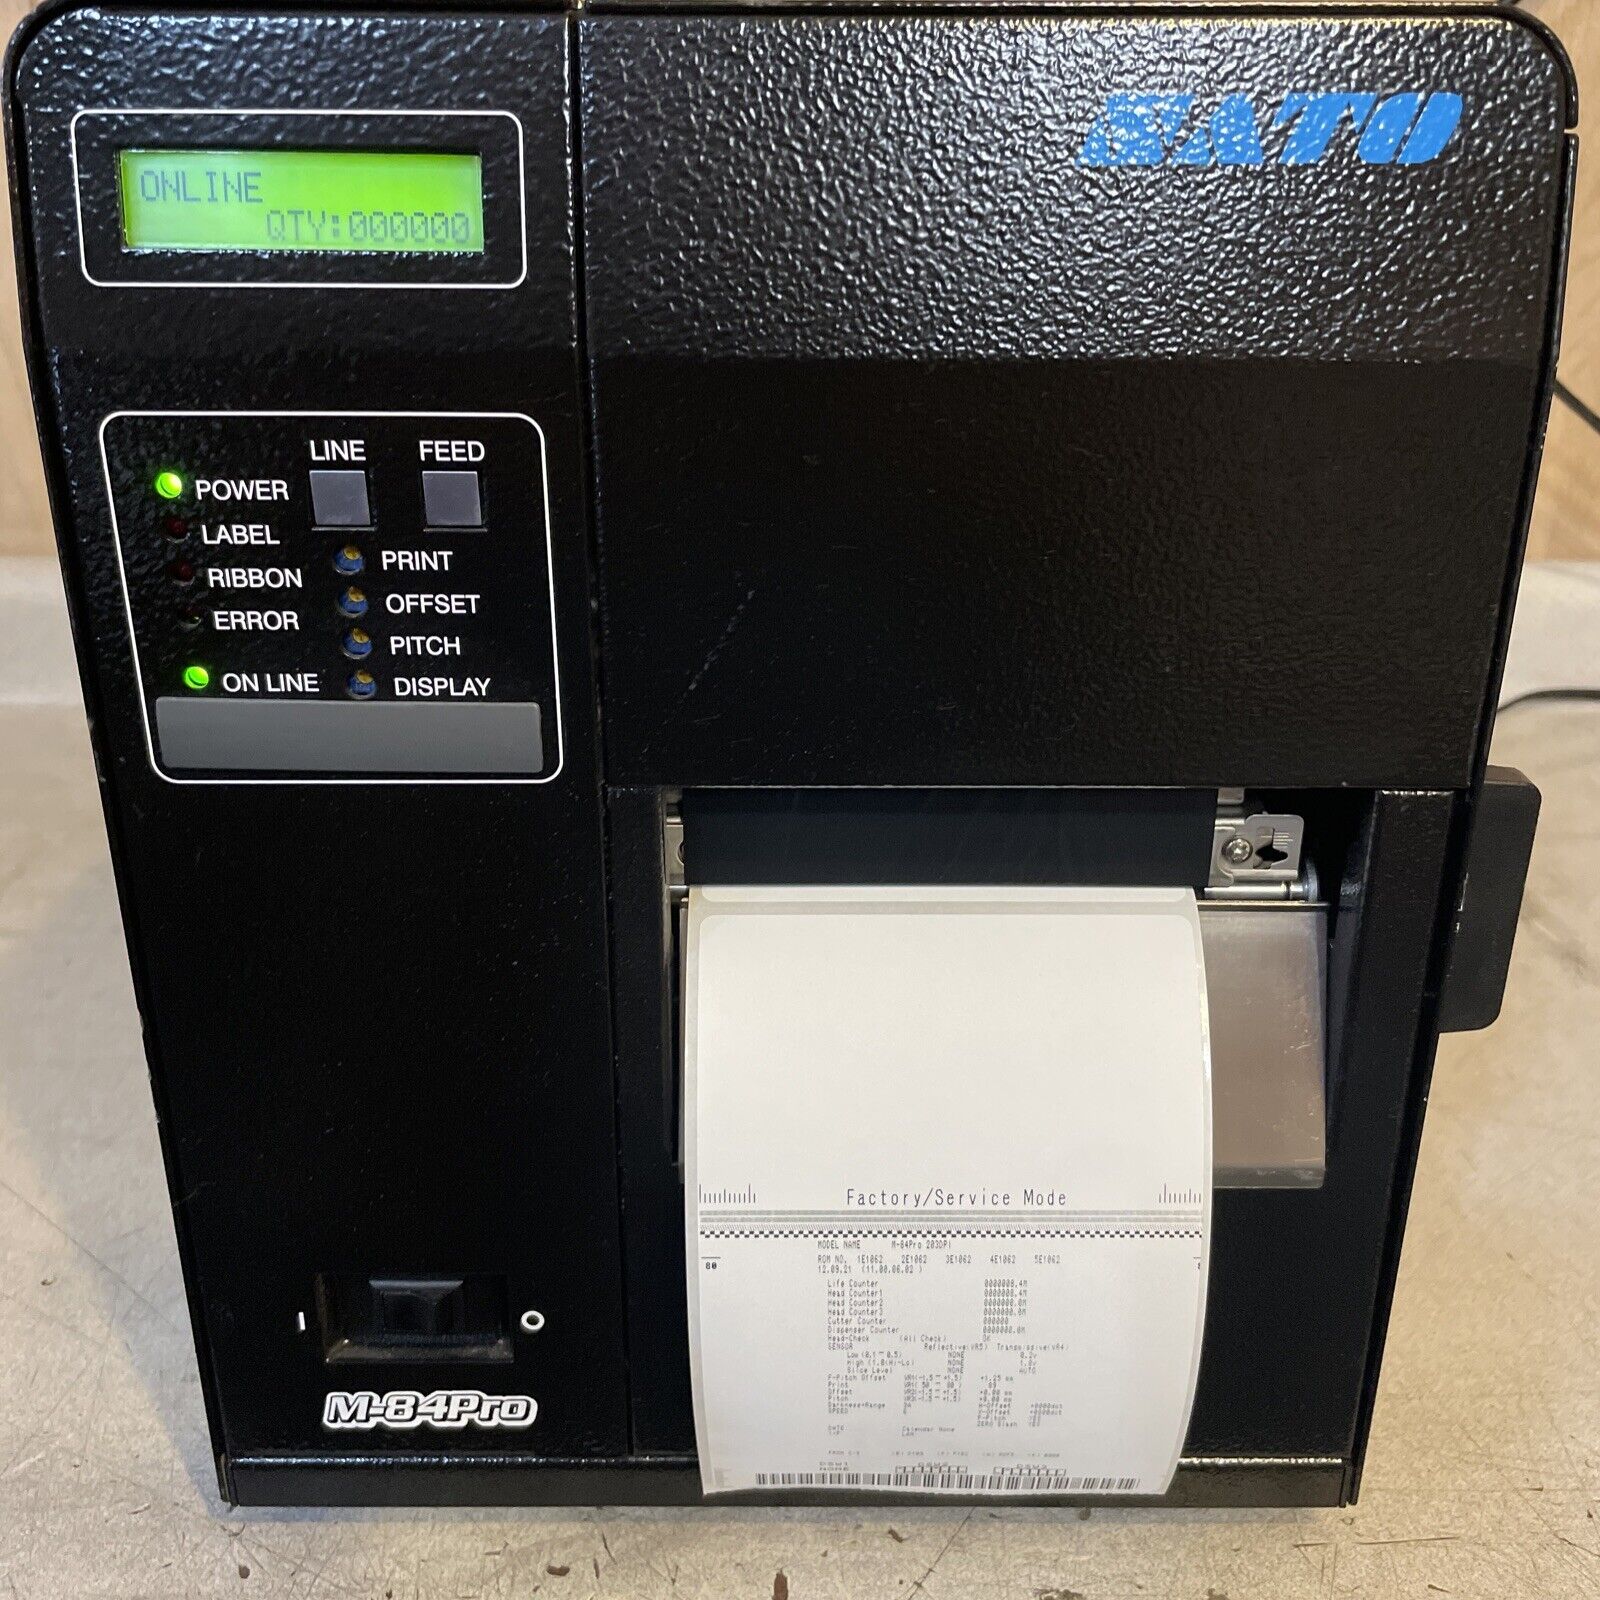 SATO M-84PRO-2 Industrial Thermal Transfer Label Printer w/ Ethernet